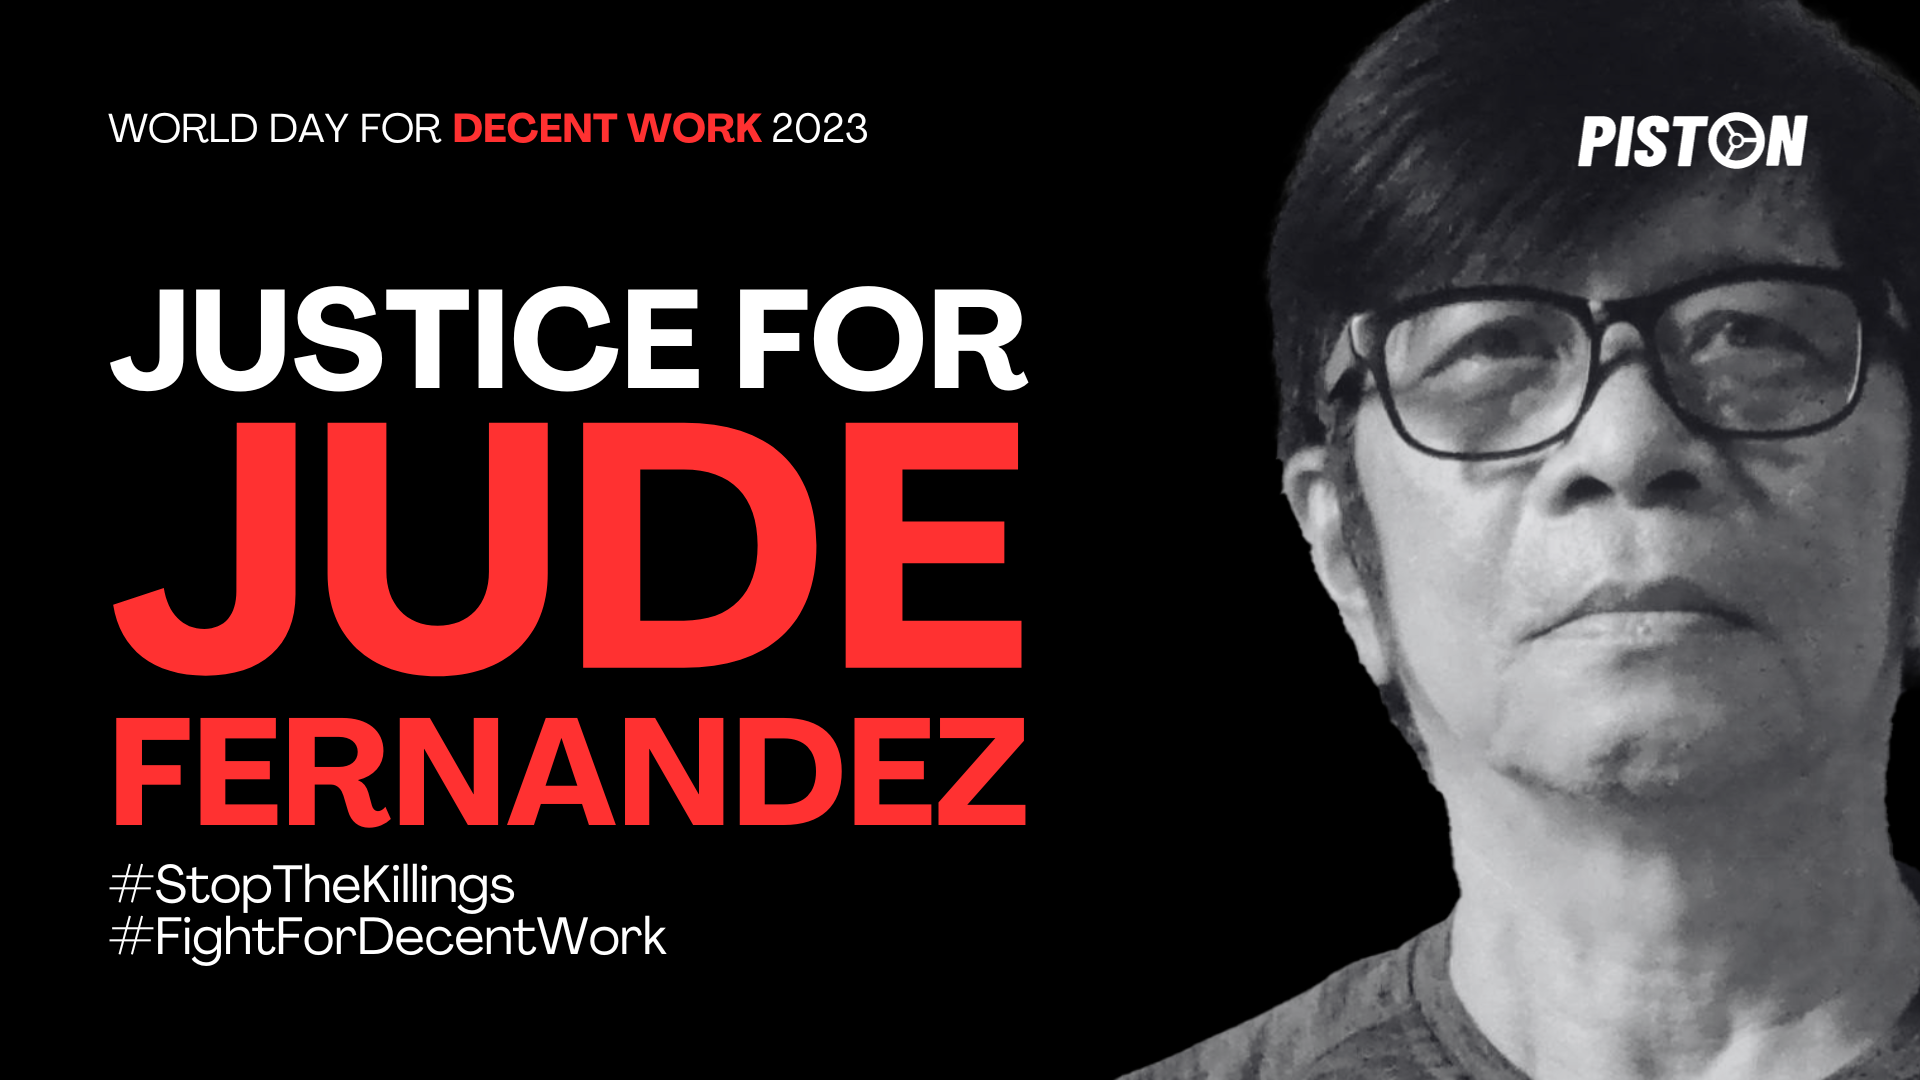 On World Day for Decent Work: PISTON condemns the brutal killing of labor organizer Jude Fernandez